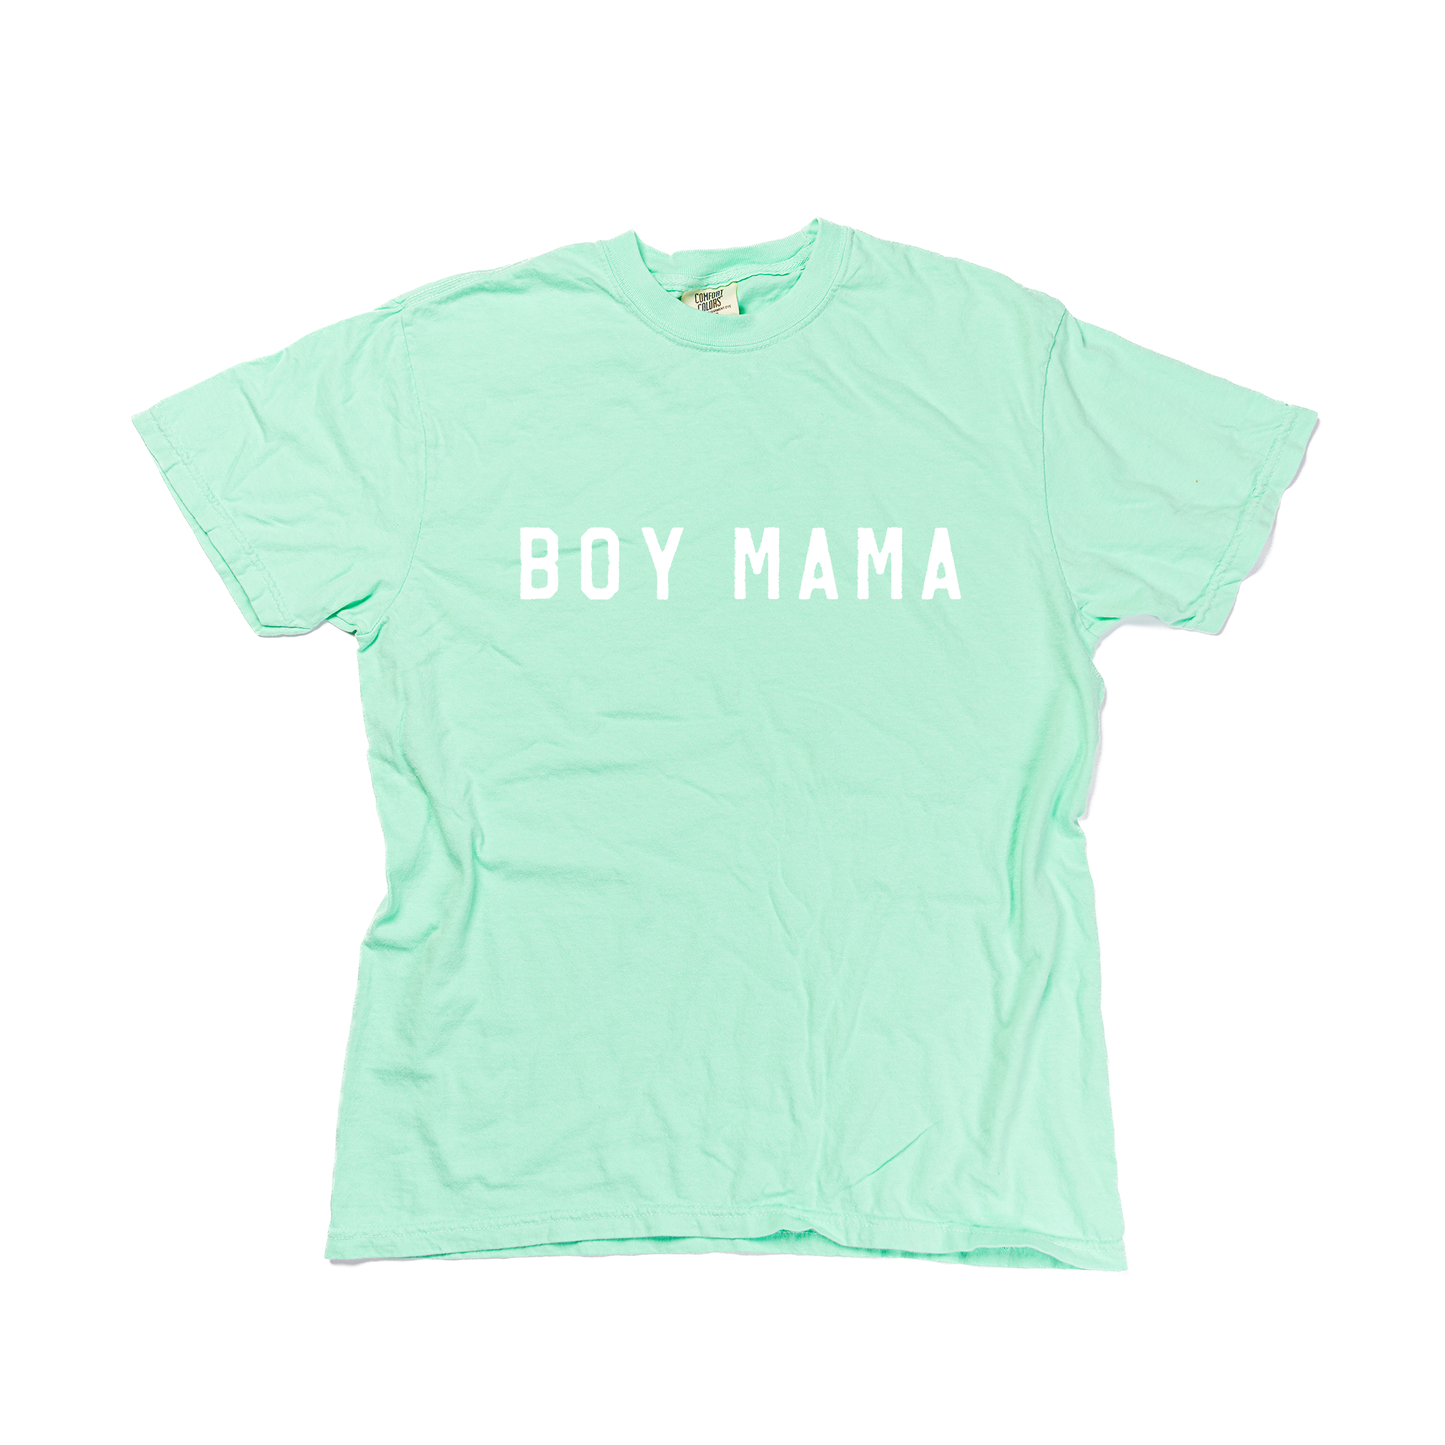 Boy Mama (Across Front, White) - Tee (Island Reef)